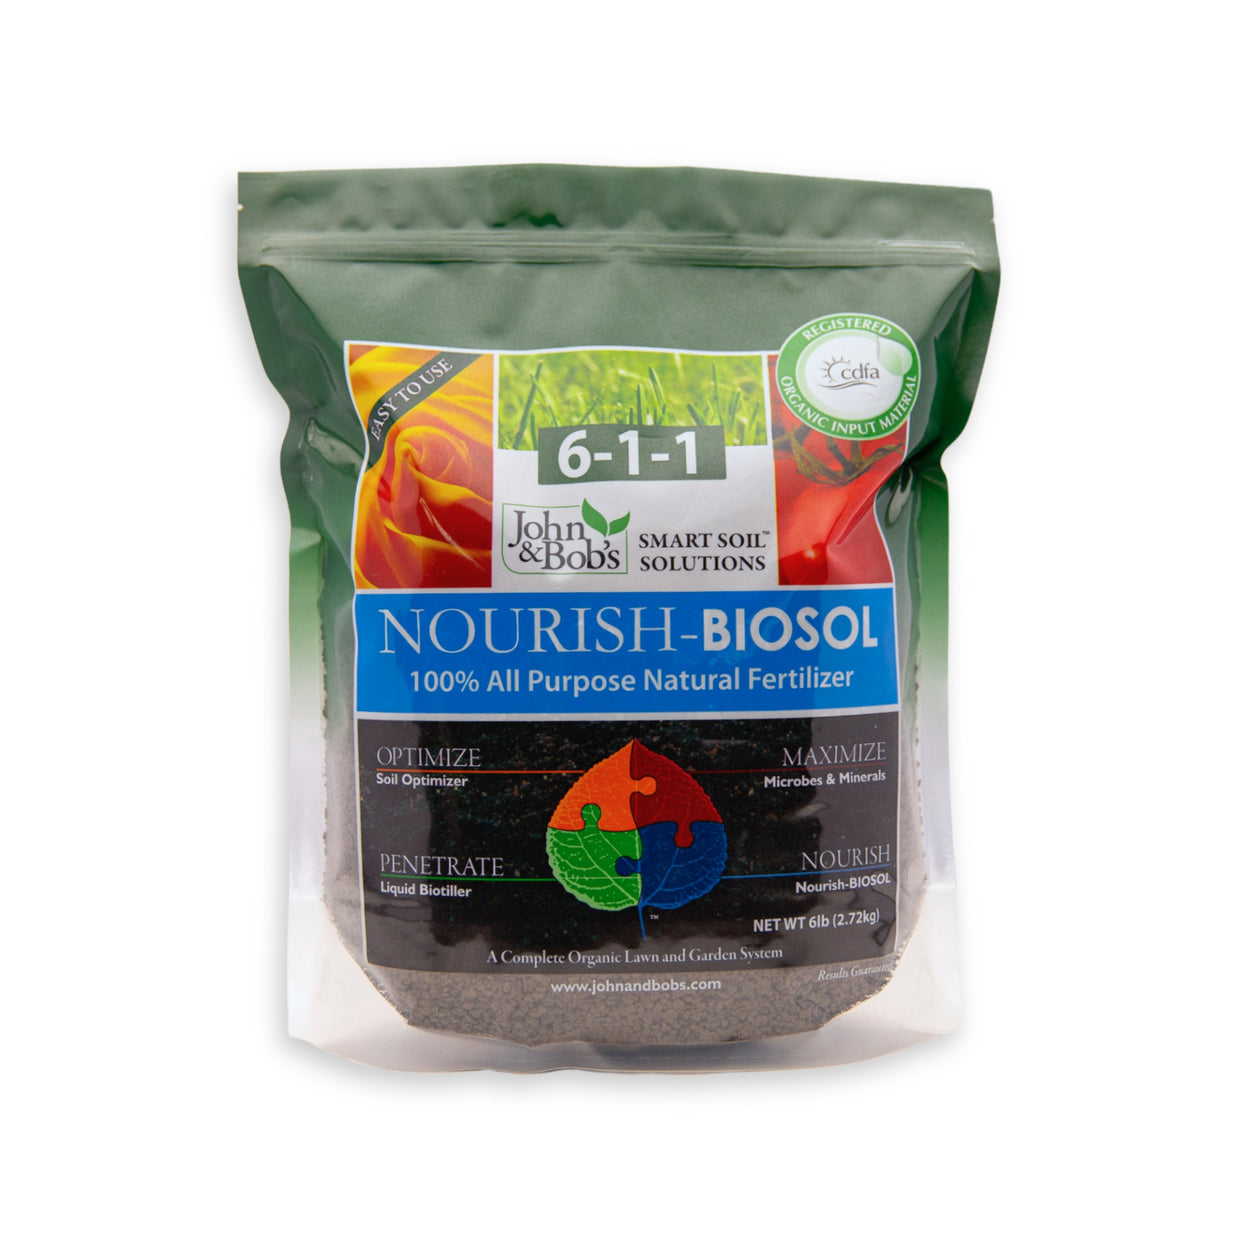 Nourish-Biosol